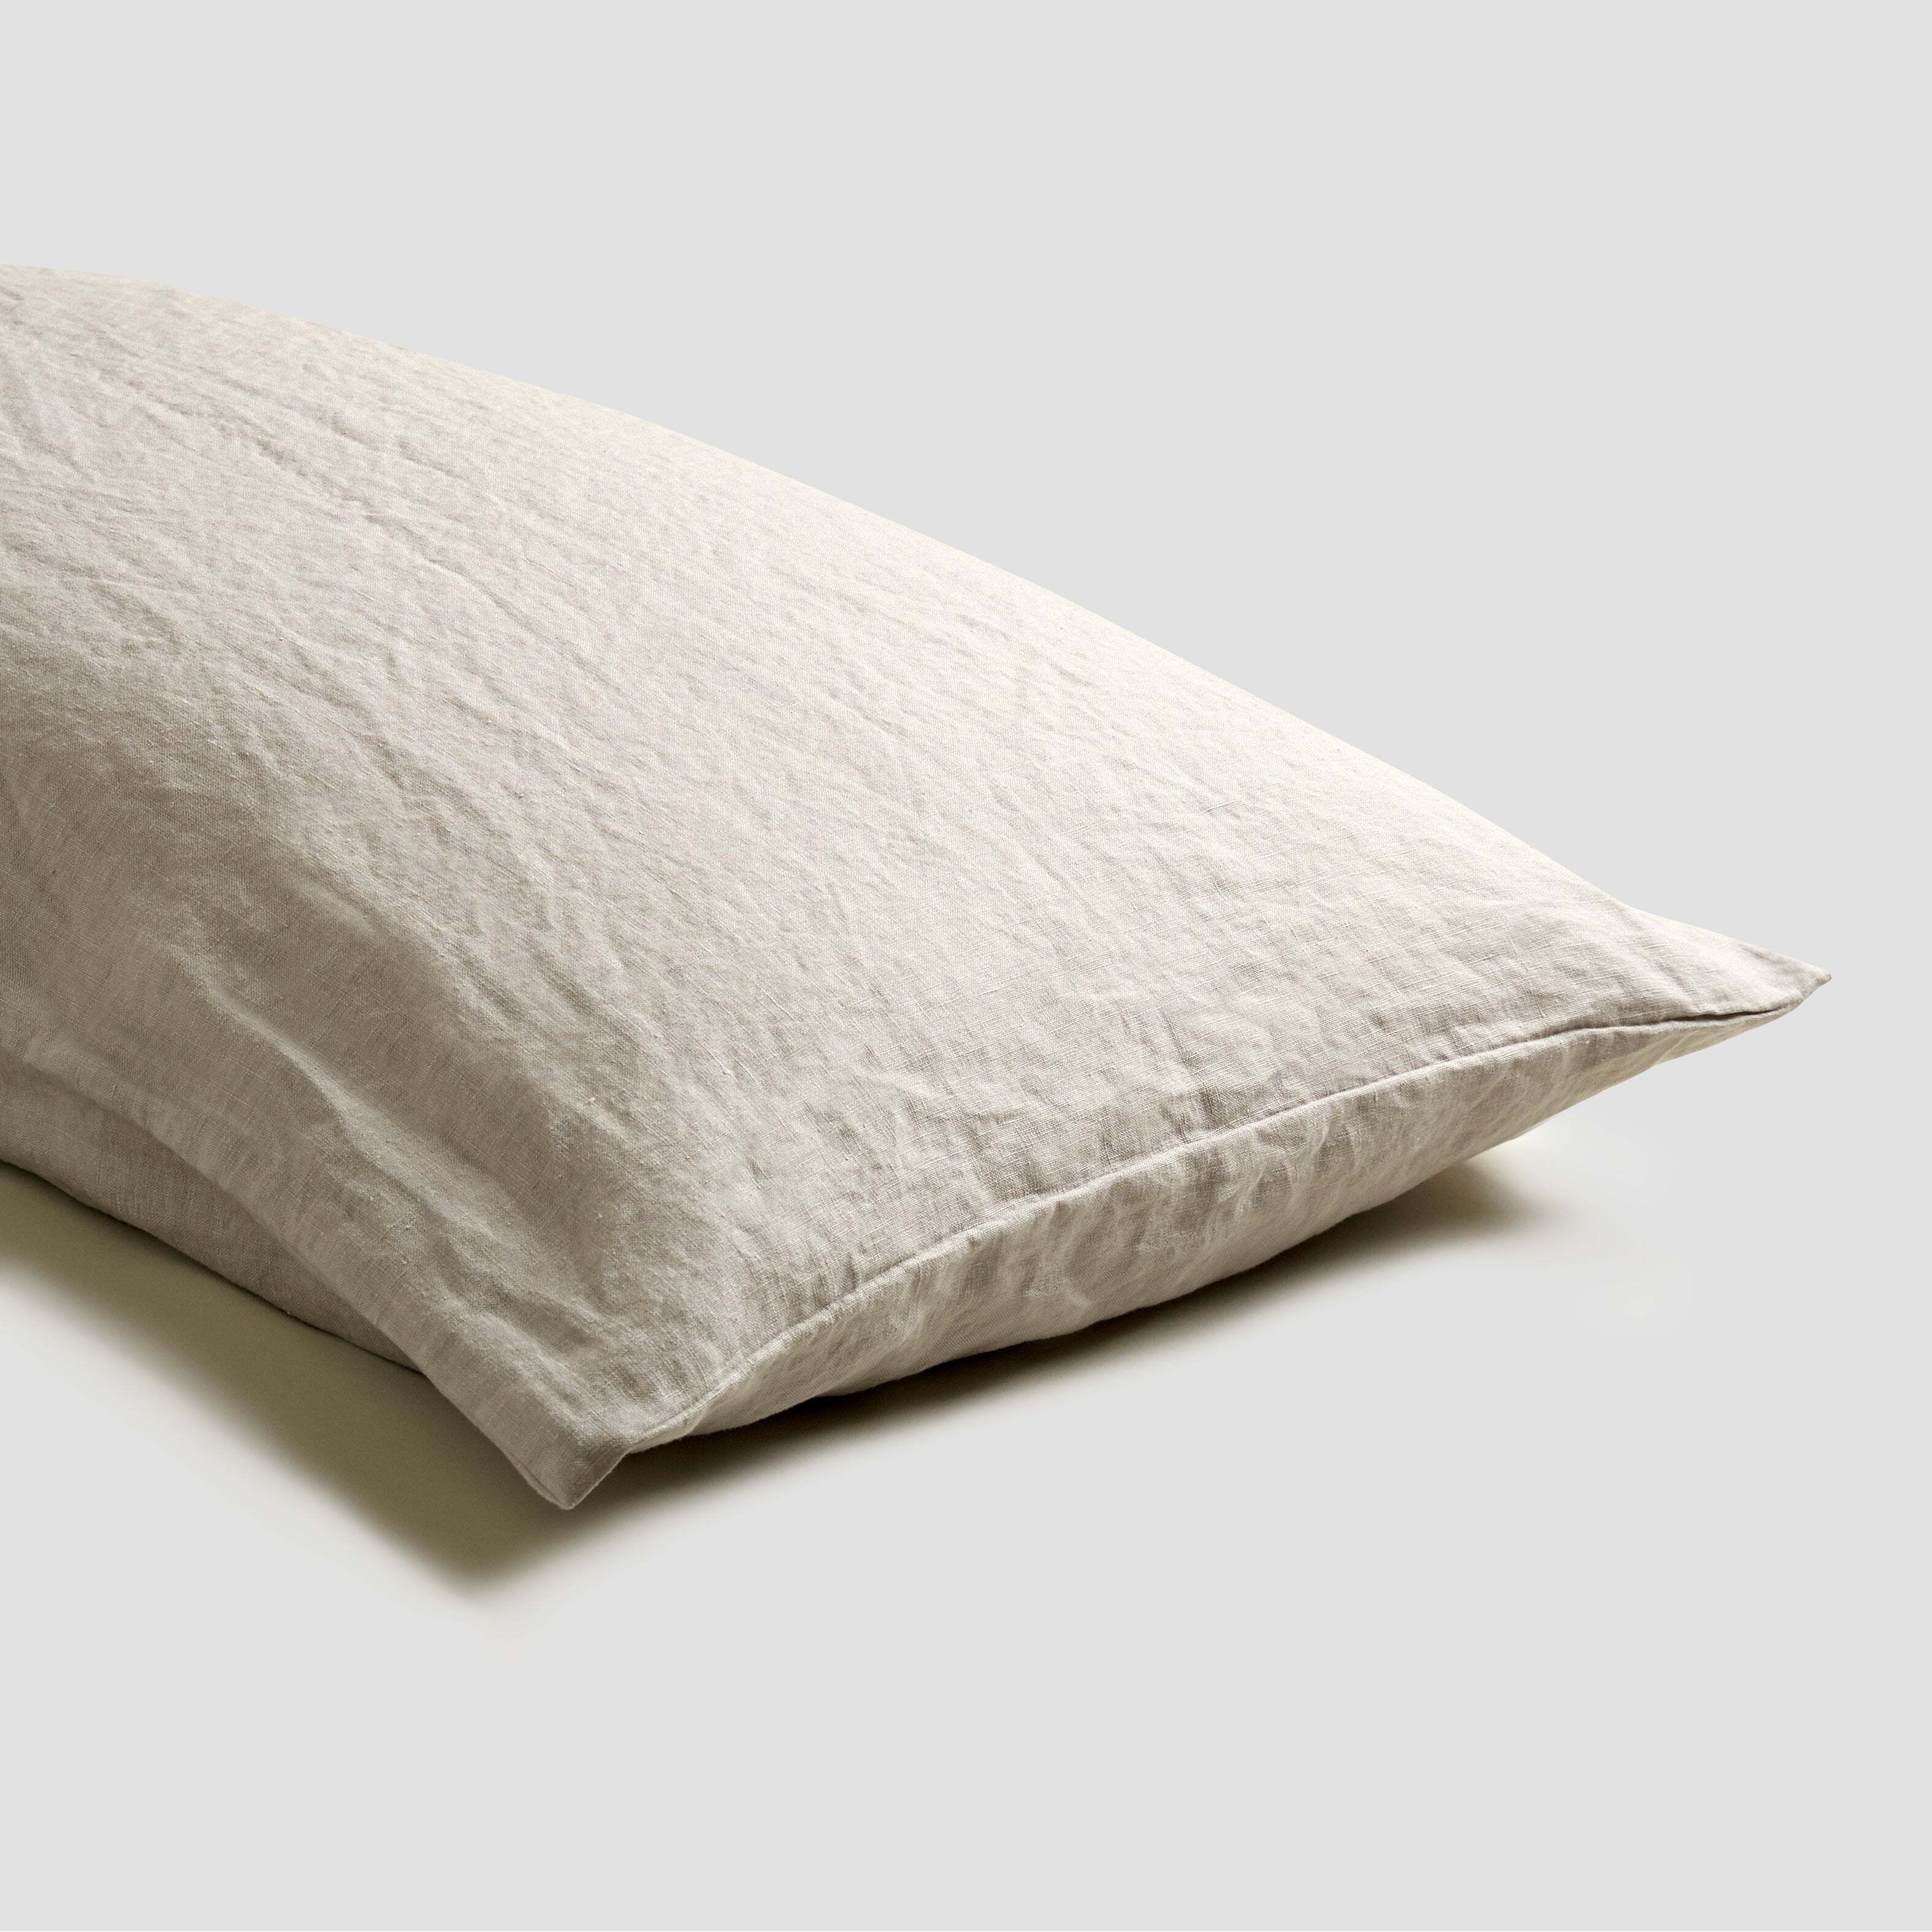 Piglet Oatmeal Linen Pillowcases (Pair) Size Square